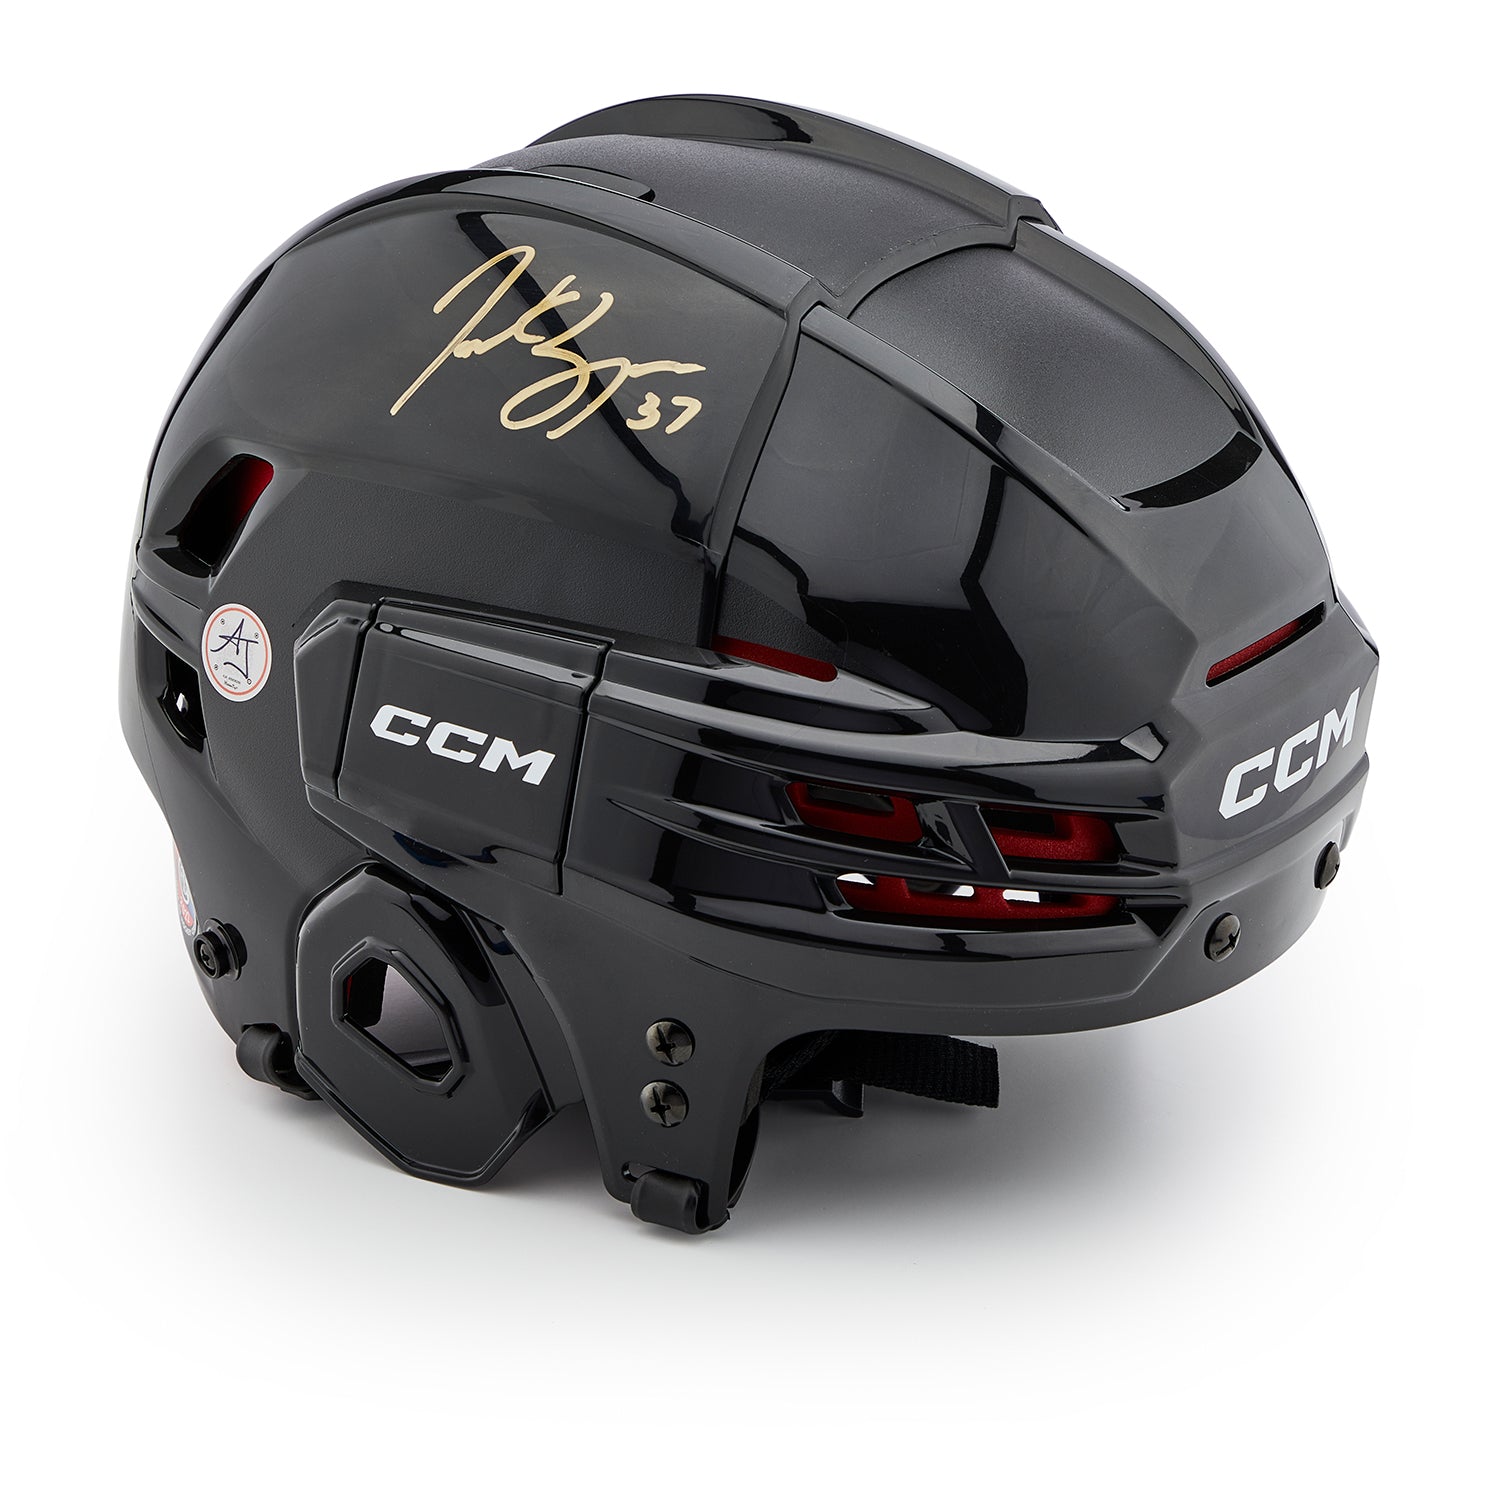 Patrice Bergeron Autographed Black CCM Tacks Hockey Helmet